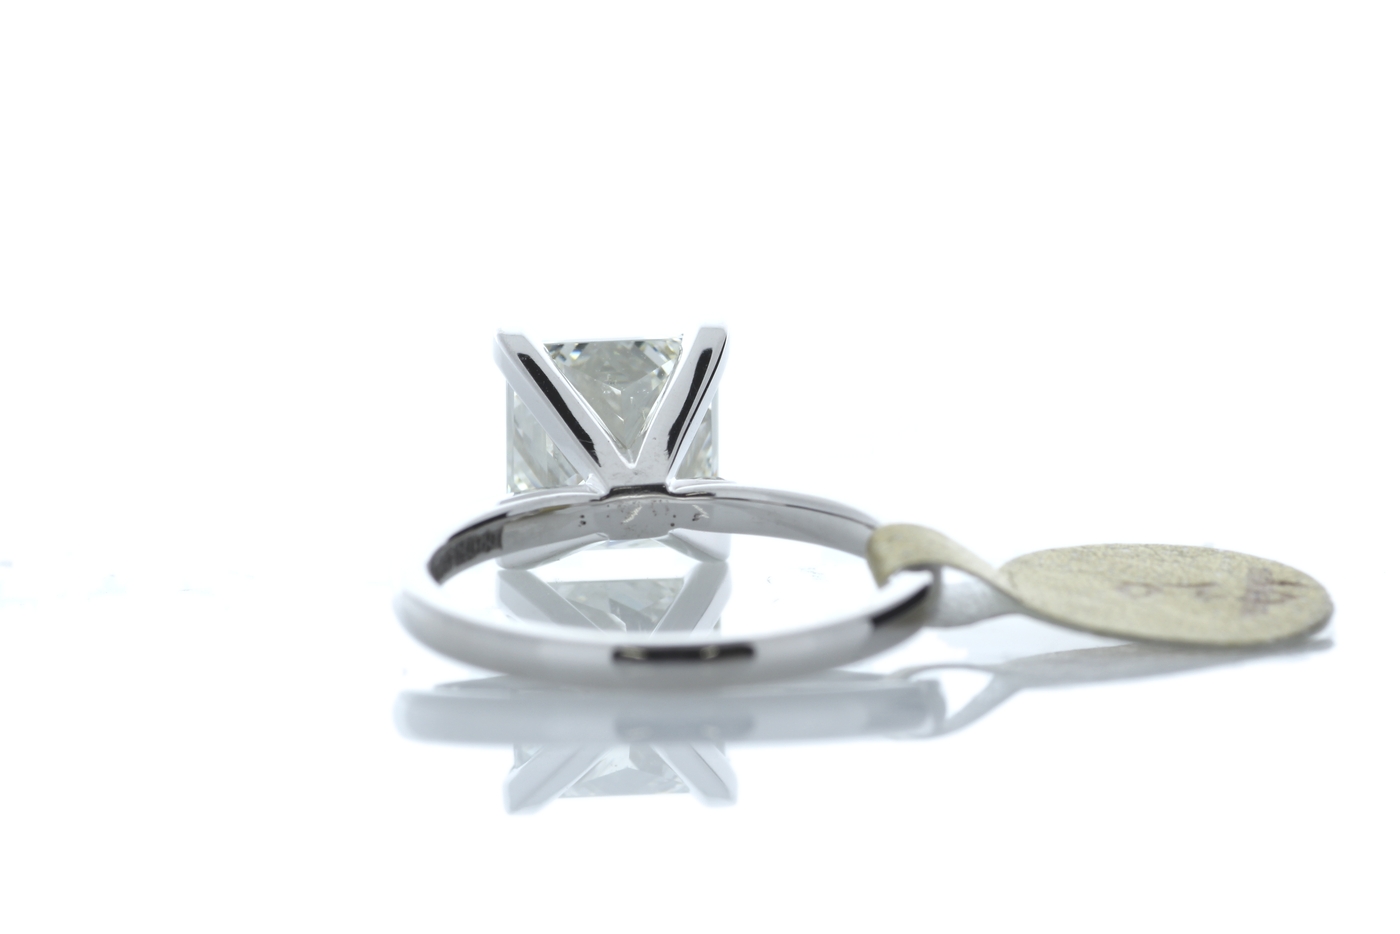 18ct White Gold Princess Cut Diamond Ring 3.09 Carats - Image 3 of 4